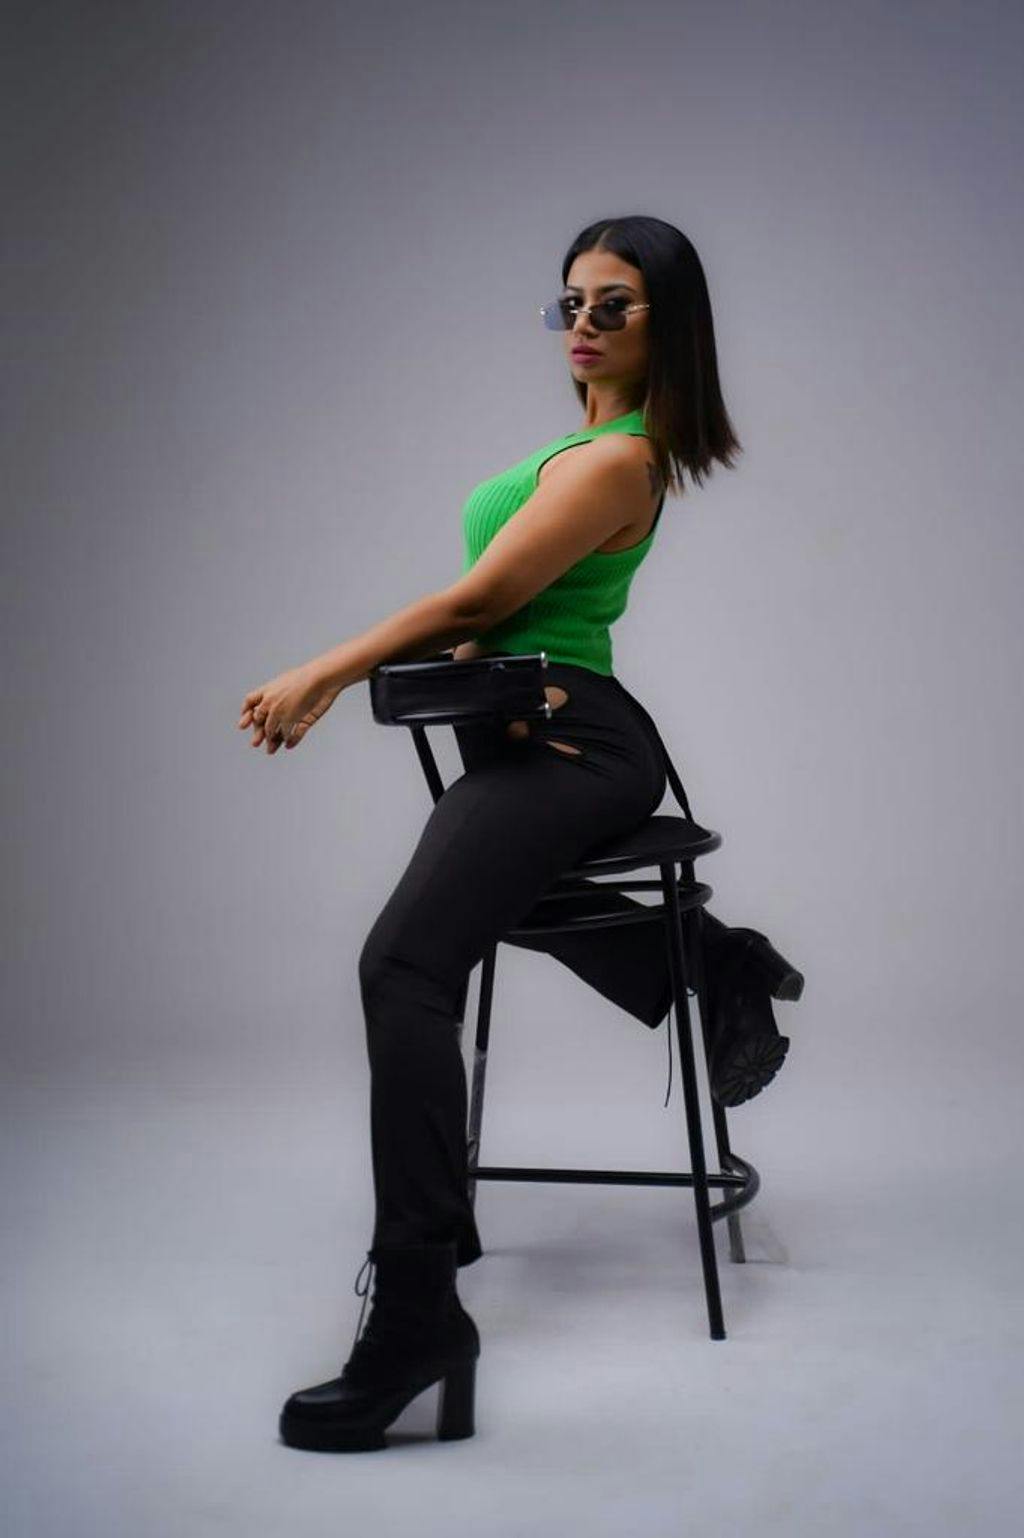 Priyanka Chatterjee's blurred background